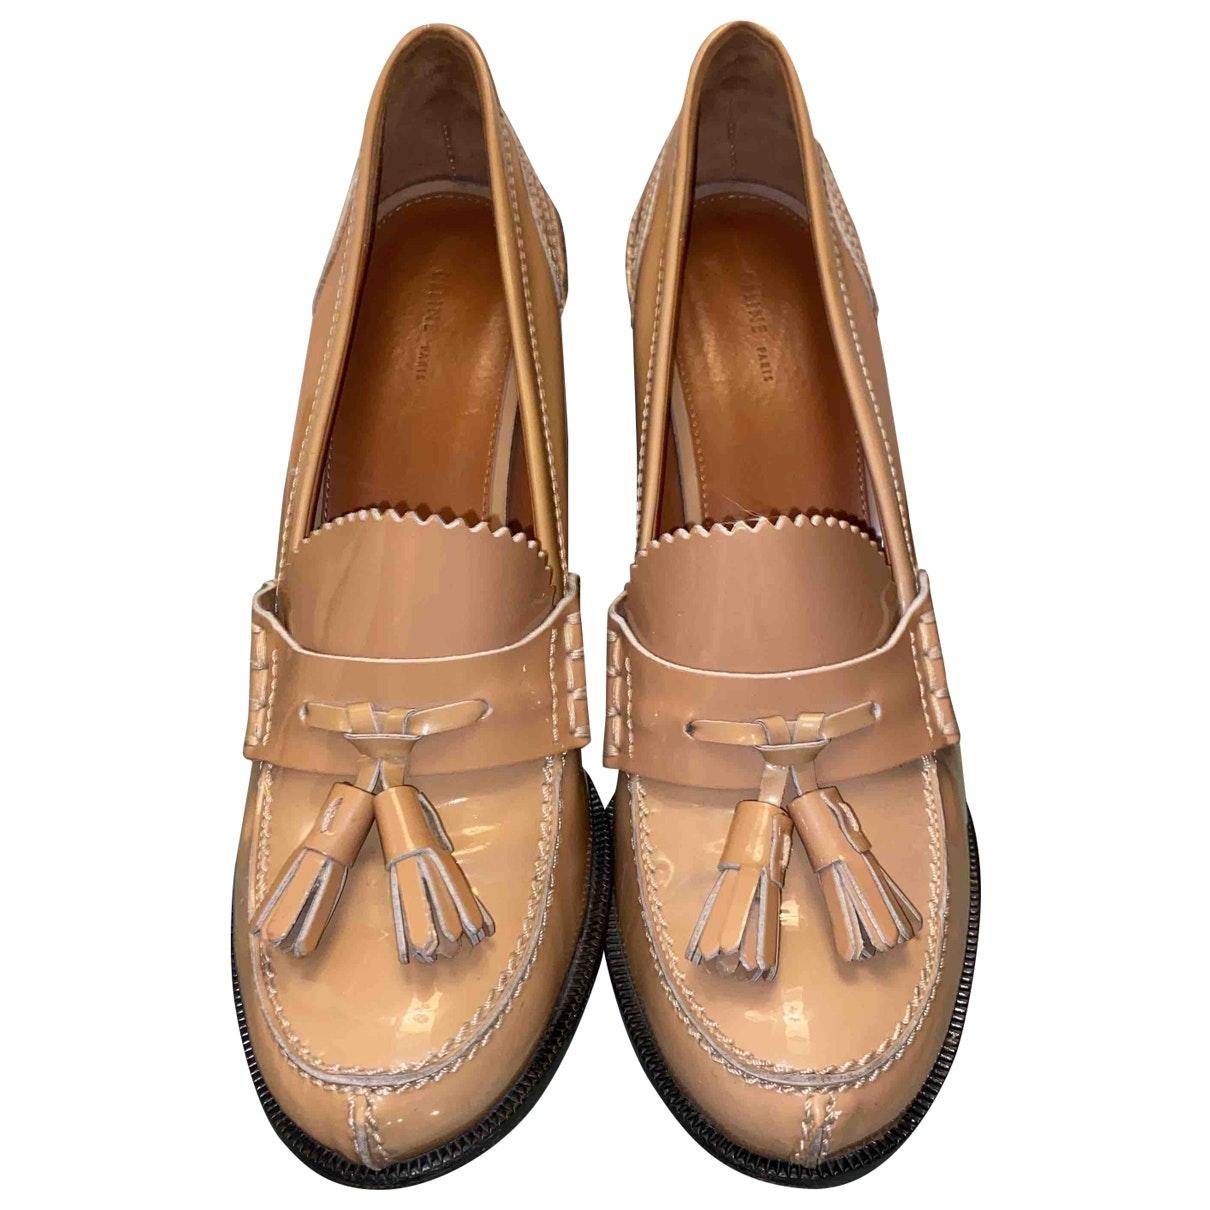 Celine Patent Leather Heels - Lyst